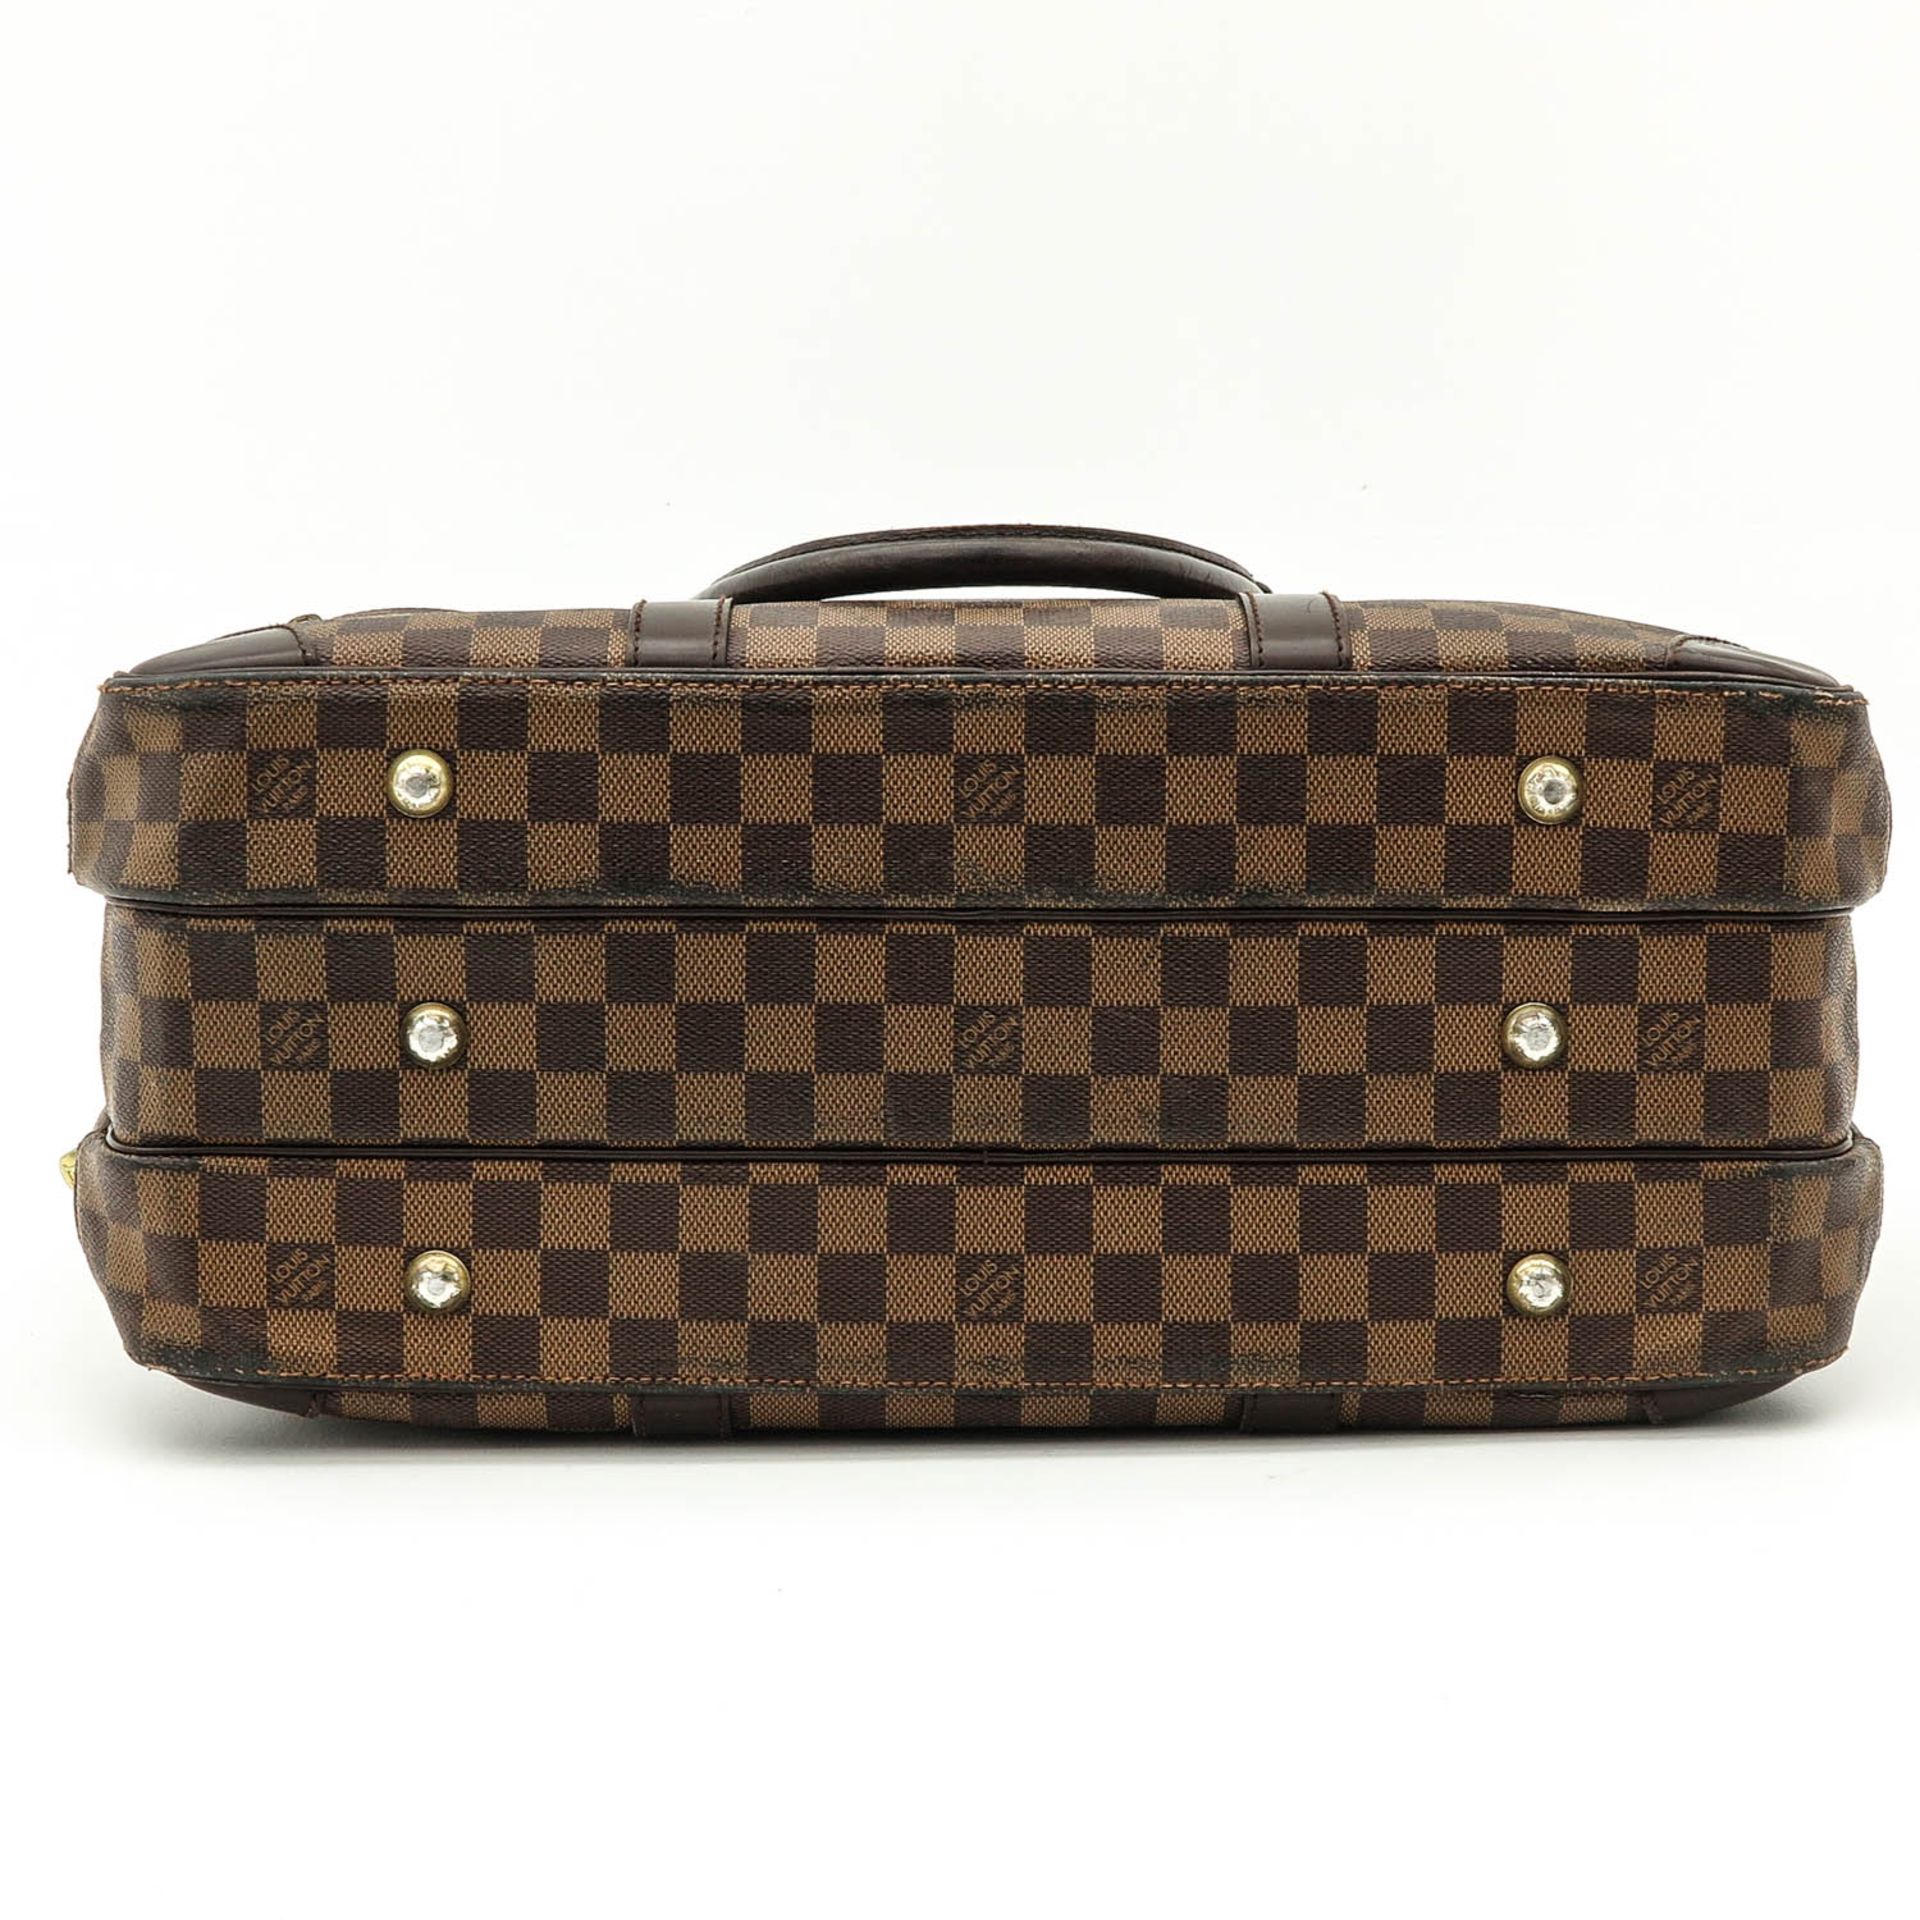 A Custom Made Louis Vuitton Travel Bag - Image 6 of 8